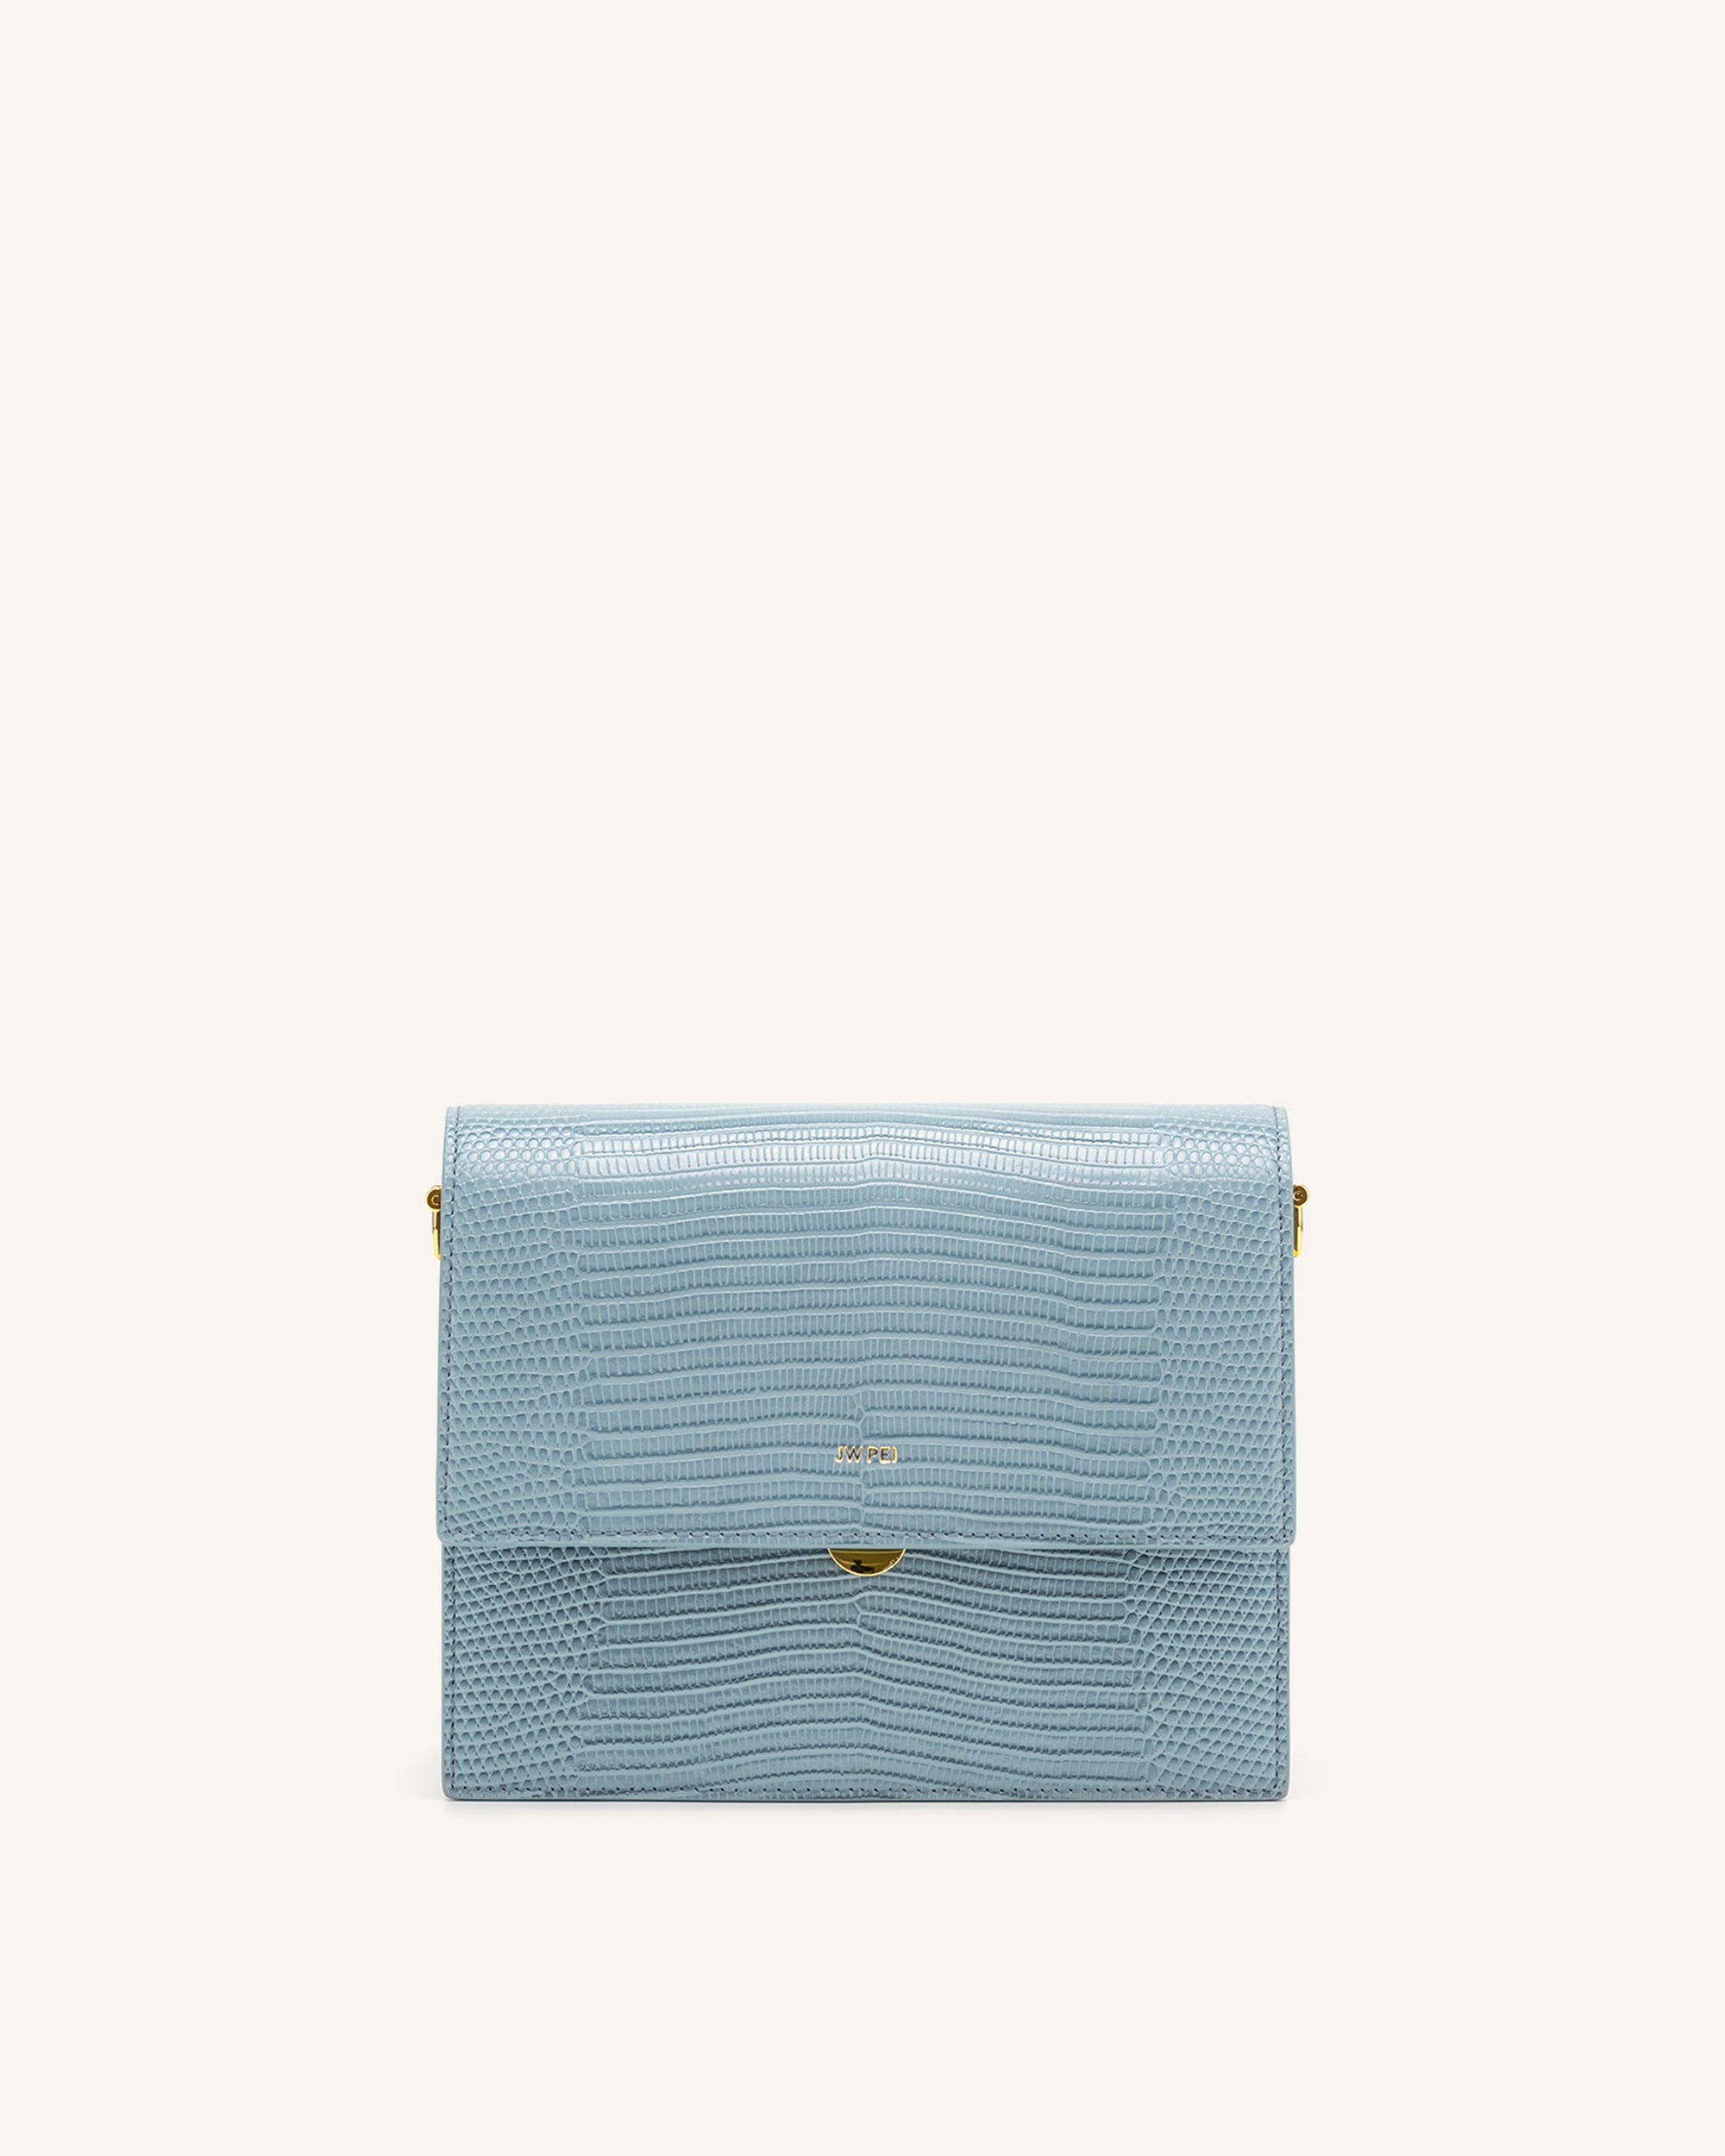 Fashion Mini Flap Bag & Purses - Ivory Lizard - JW PEI Official Shop - JW  PEI UK